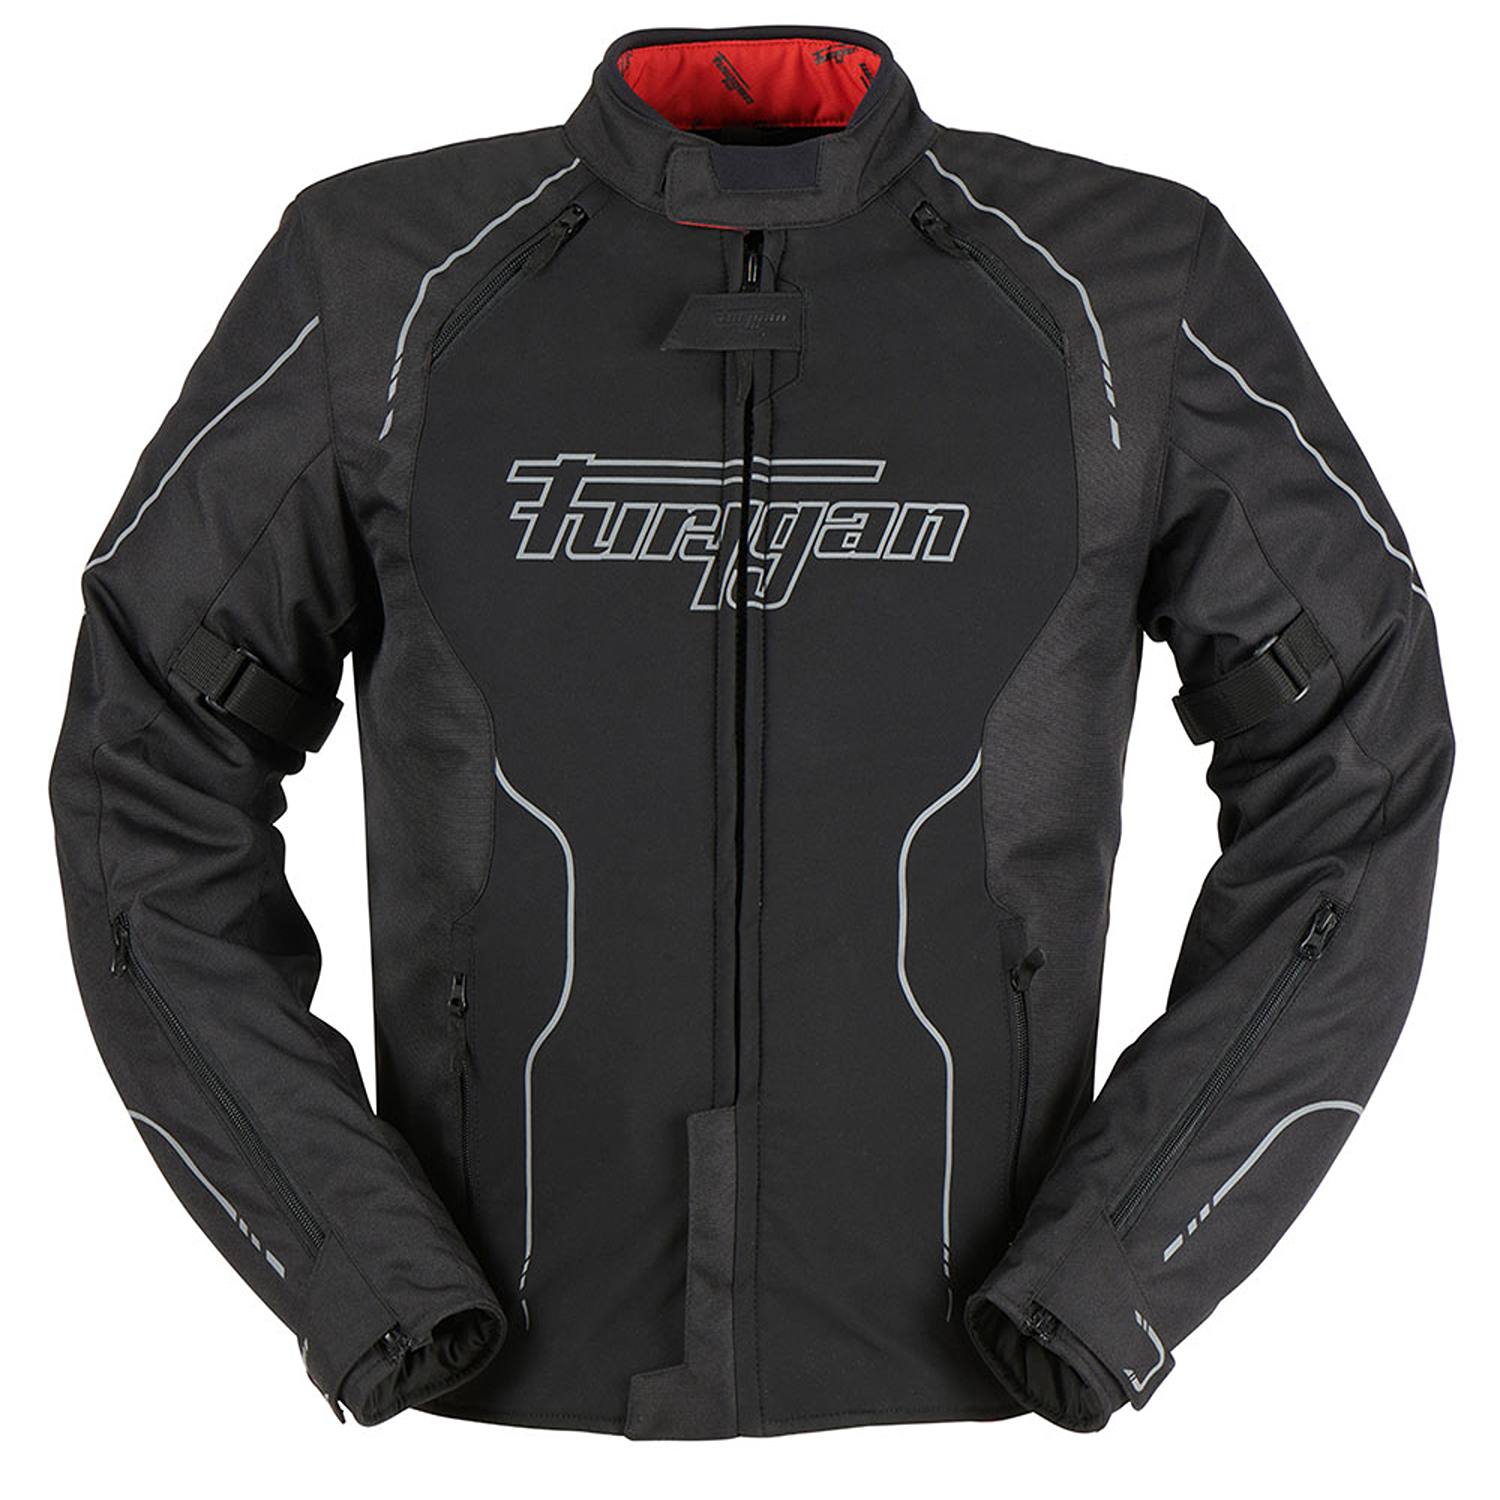 Image of Furygan Legacy 2W1 Jacket Black Reflective Grey Size L ID 3435980340544